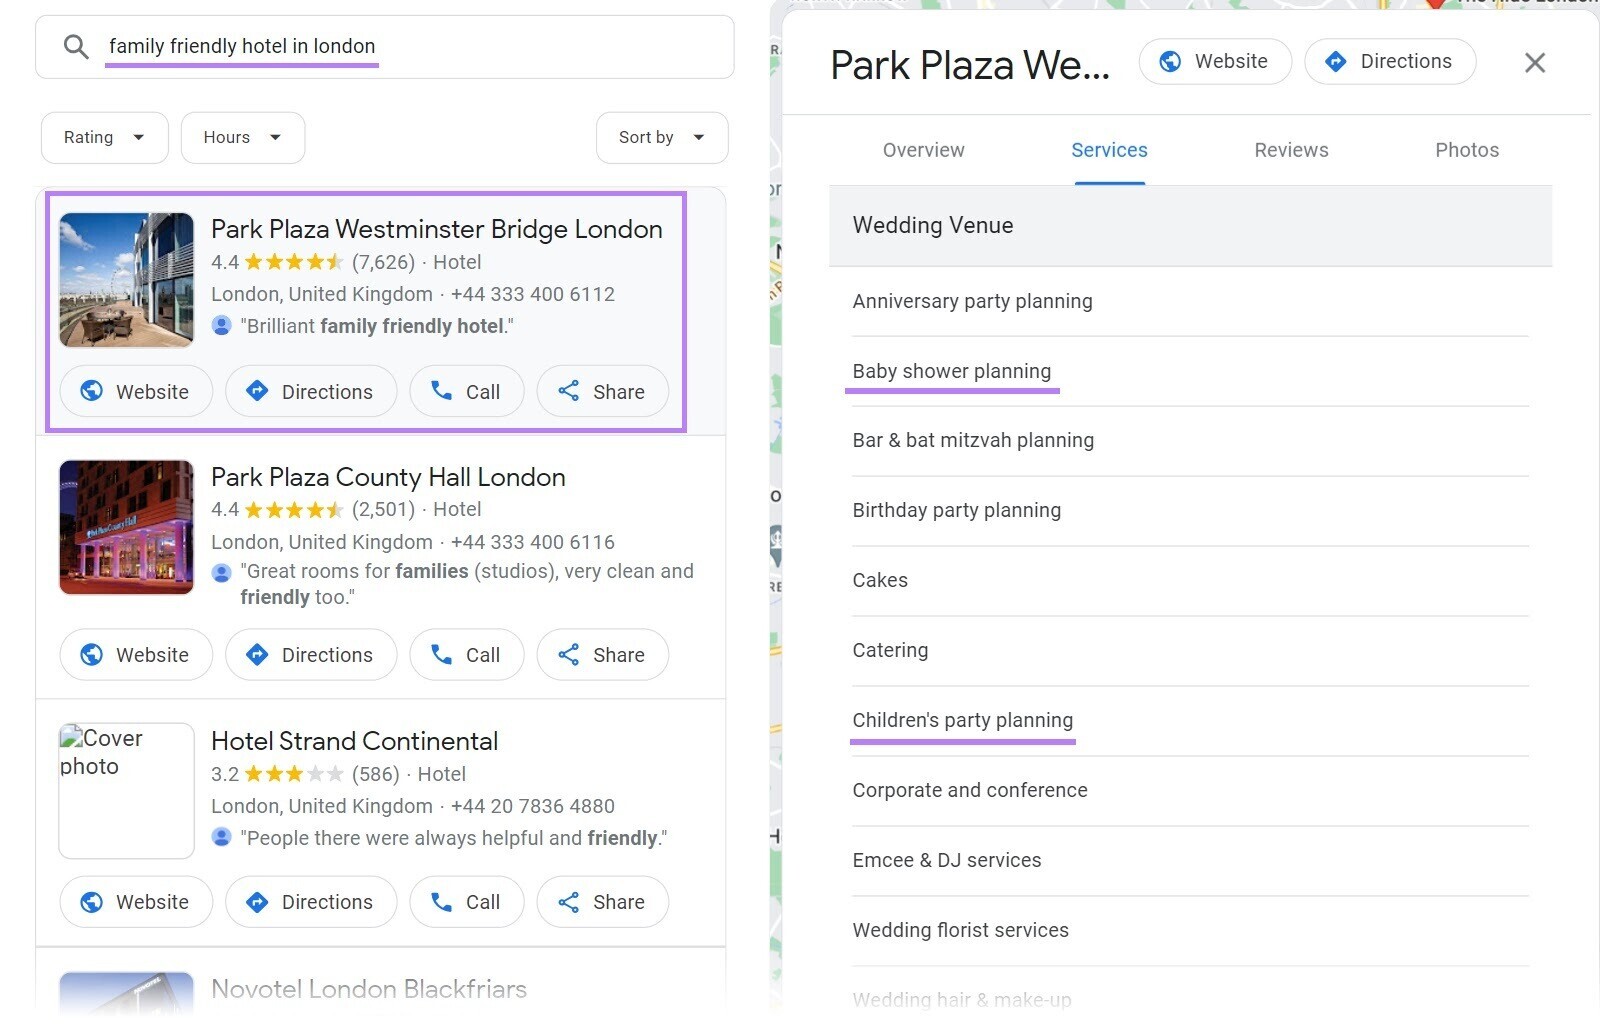 Park Plaza Westminster Bridge London keywords added to Google Business Profile